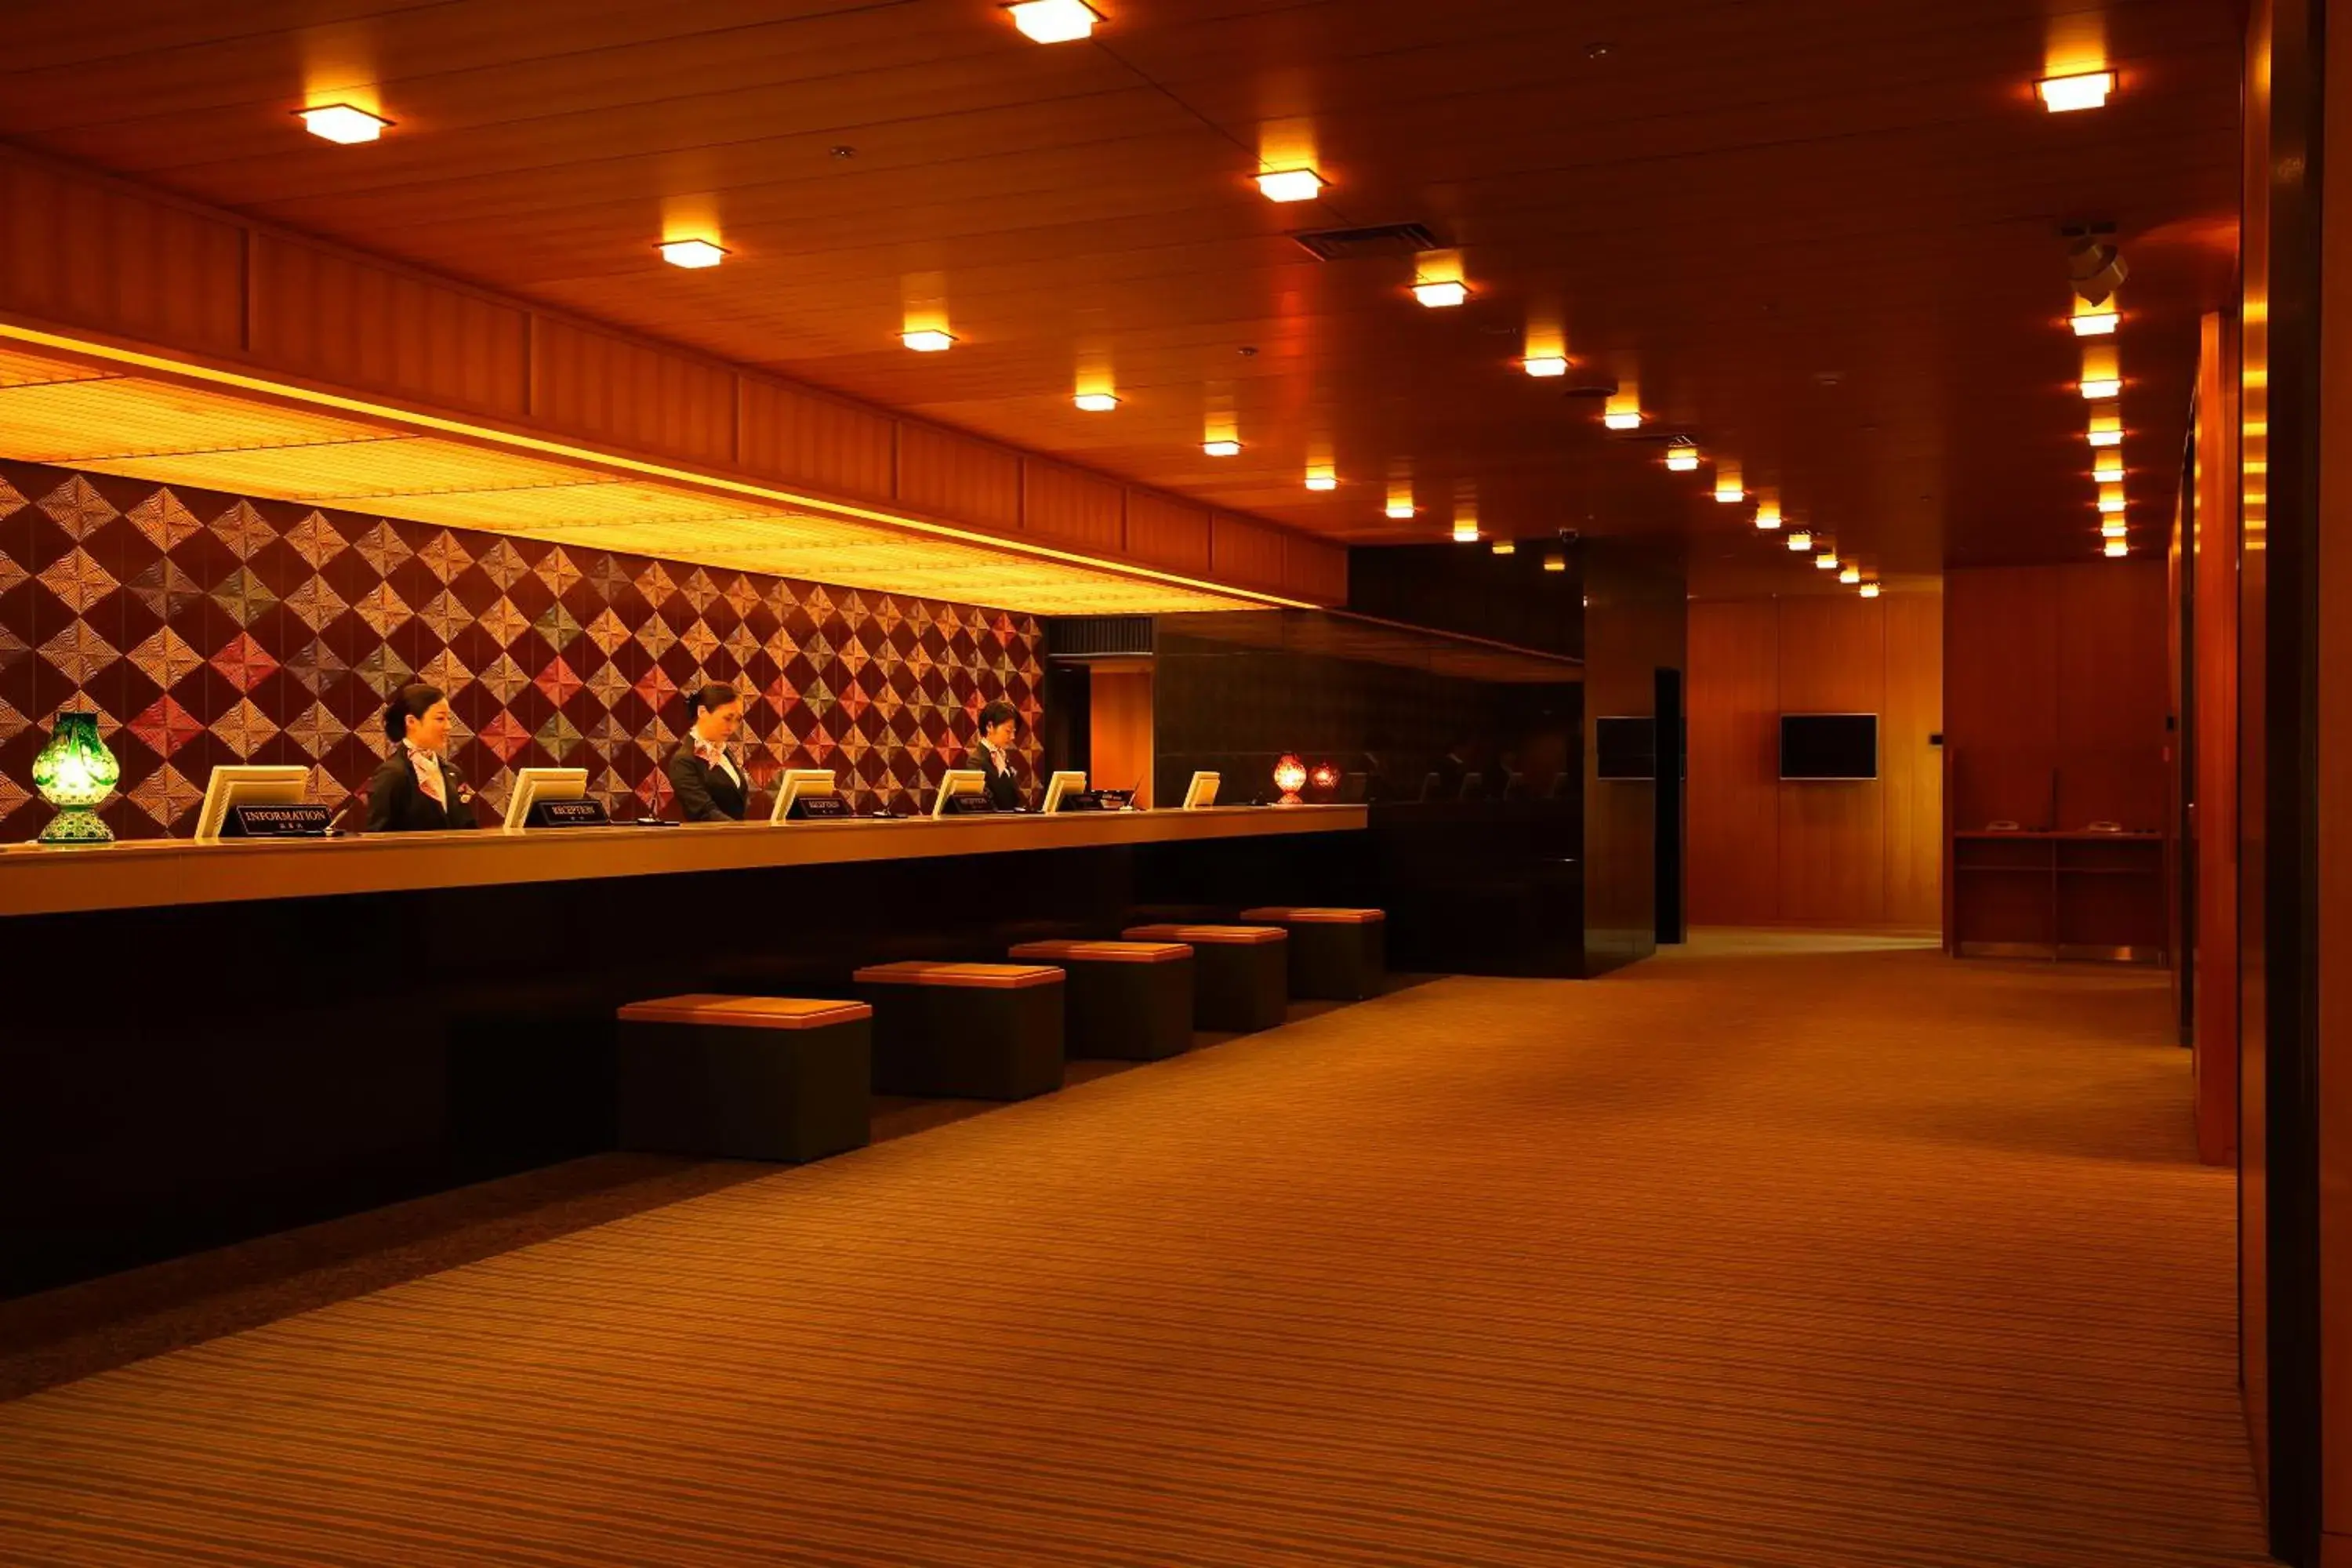 Lobby or reception in Hotel Okura Kobe